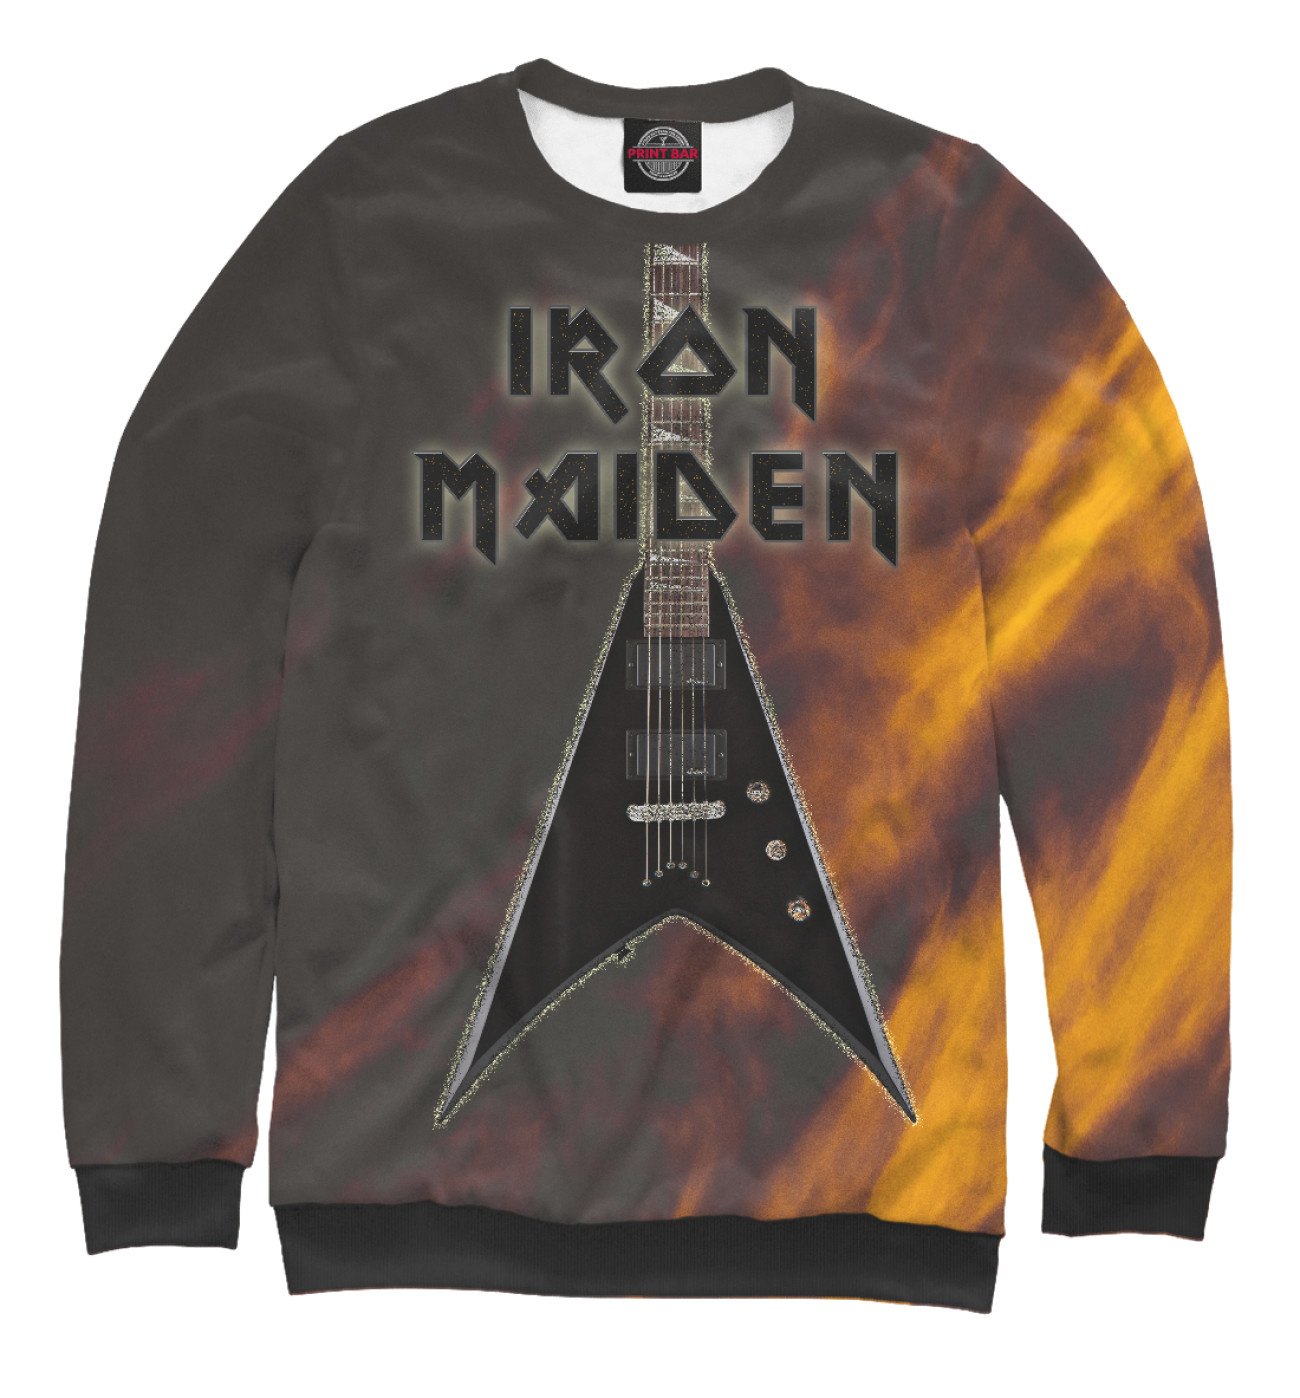 Мужской Свитшот Группа Iron Maiden, артикул: IRN-577929-swi-2